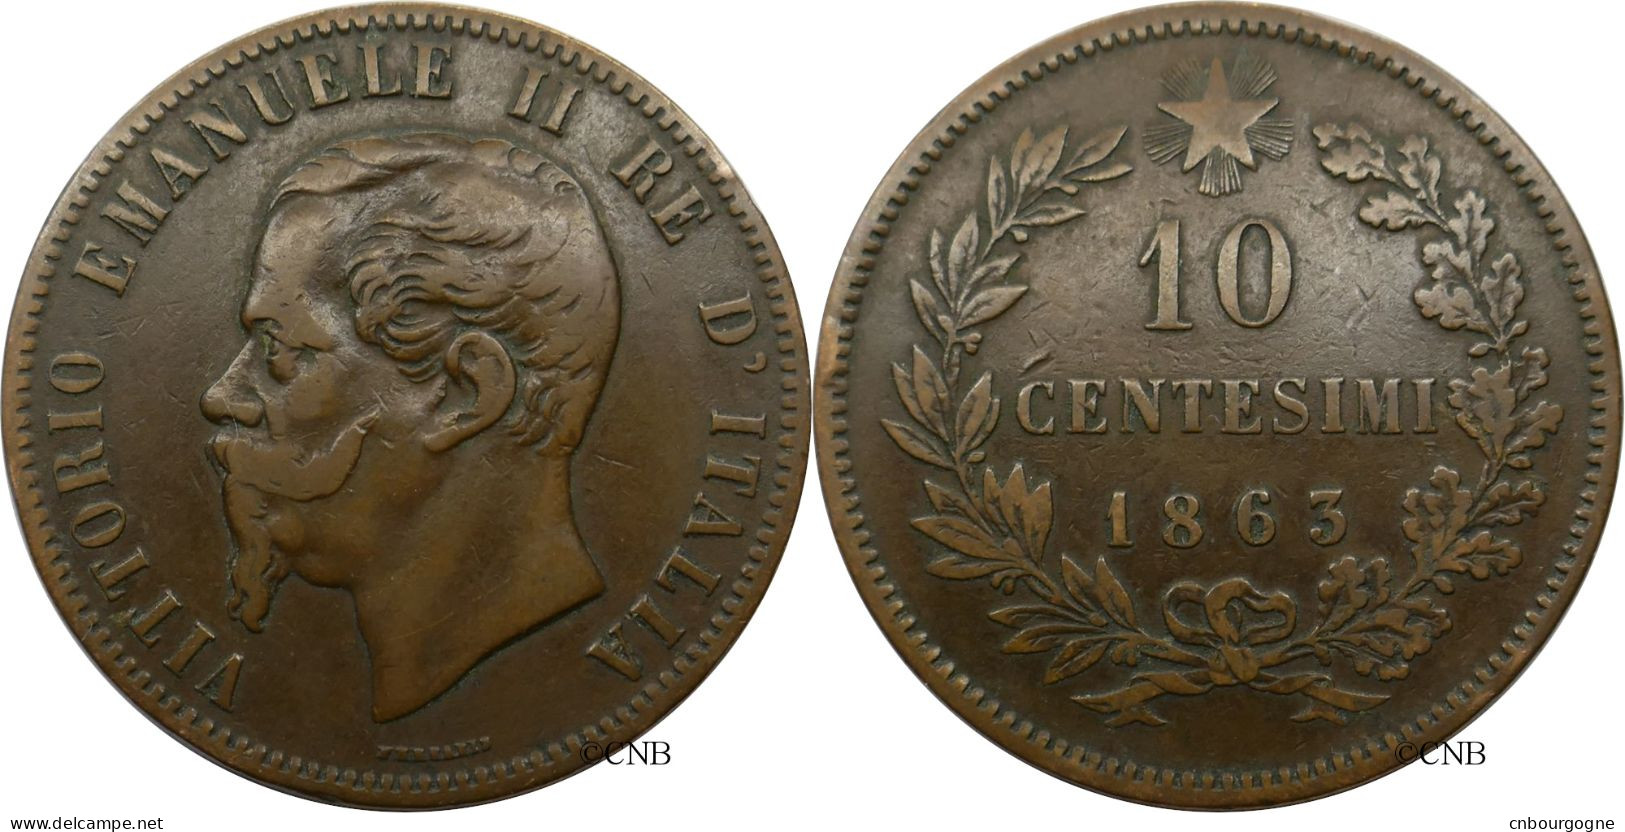 Italie - Royaume - Victor-Emmanuel II - 10 Centesimi 1863 - TB+/VF35 - Mon5964 - 1861-1878 : Víctor Emmanuel II